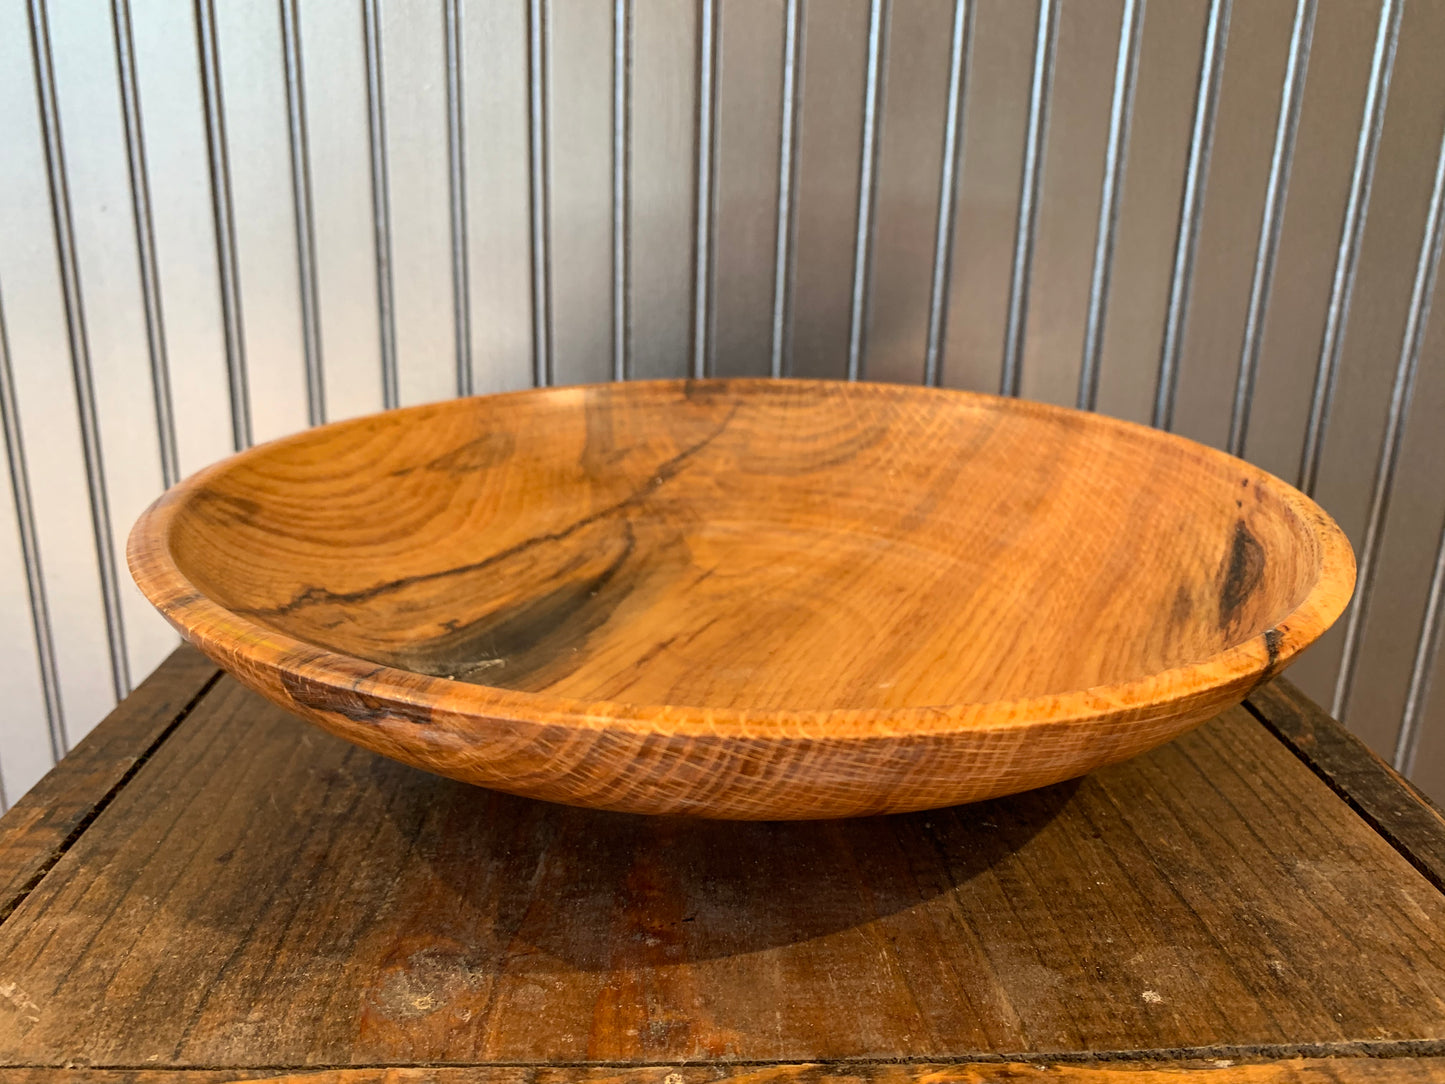 Guin Hickory wood bowl Large